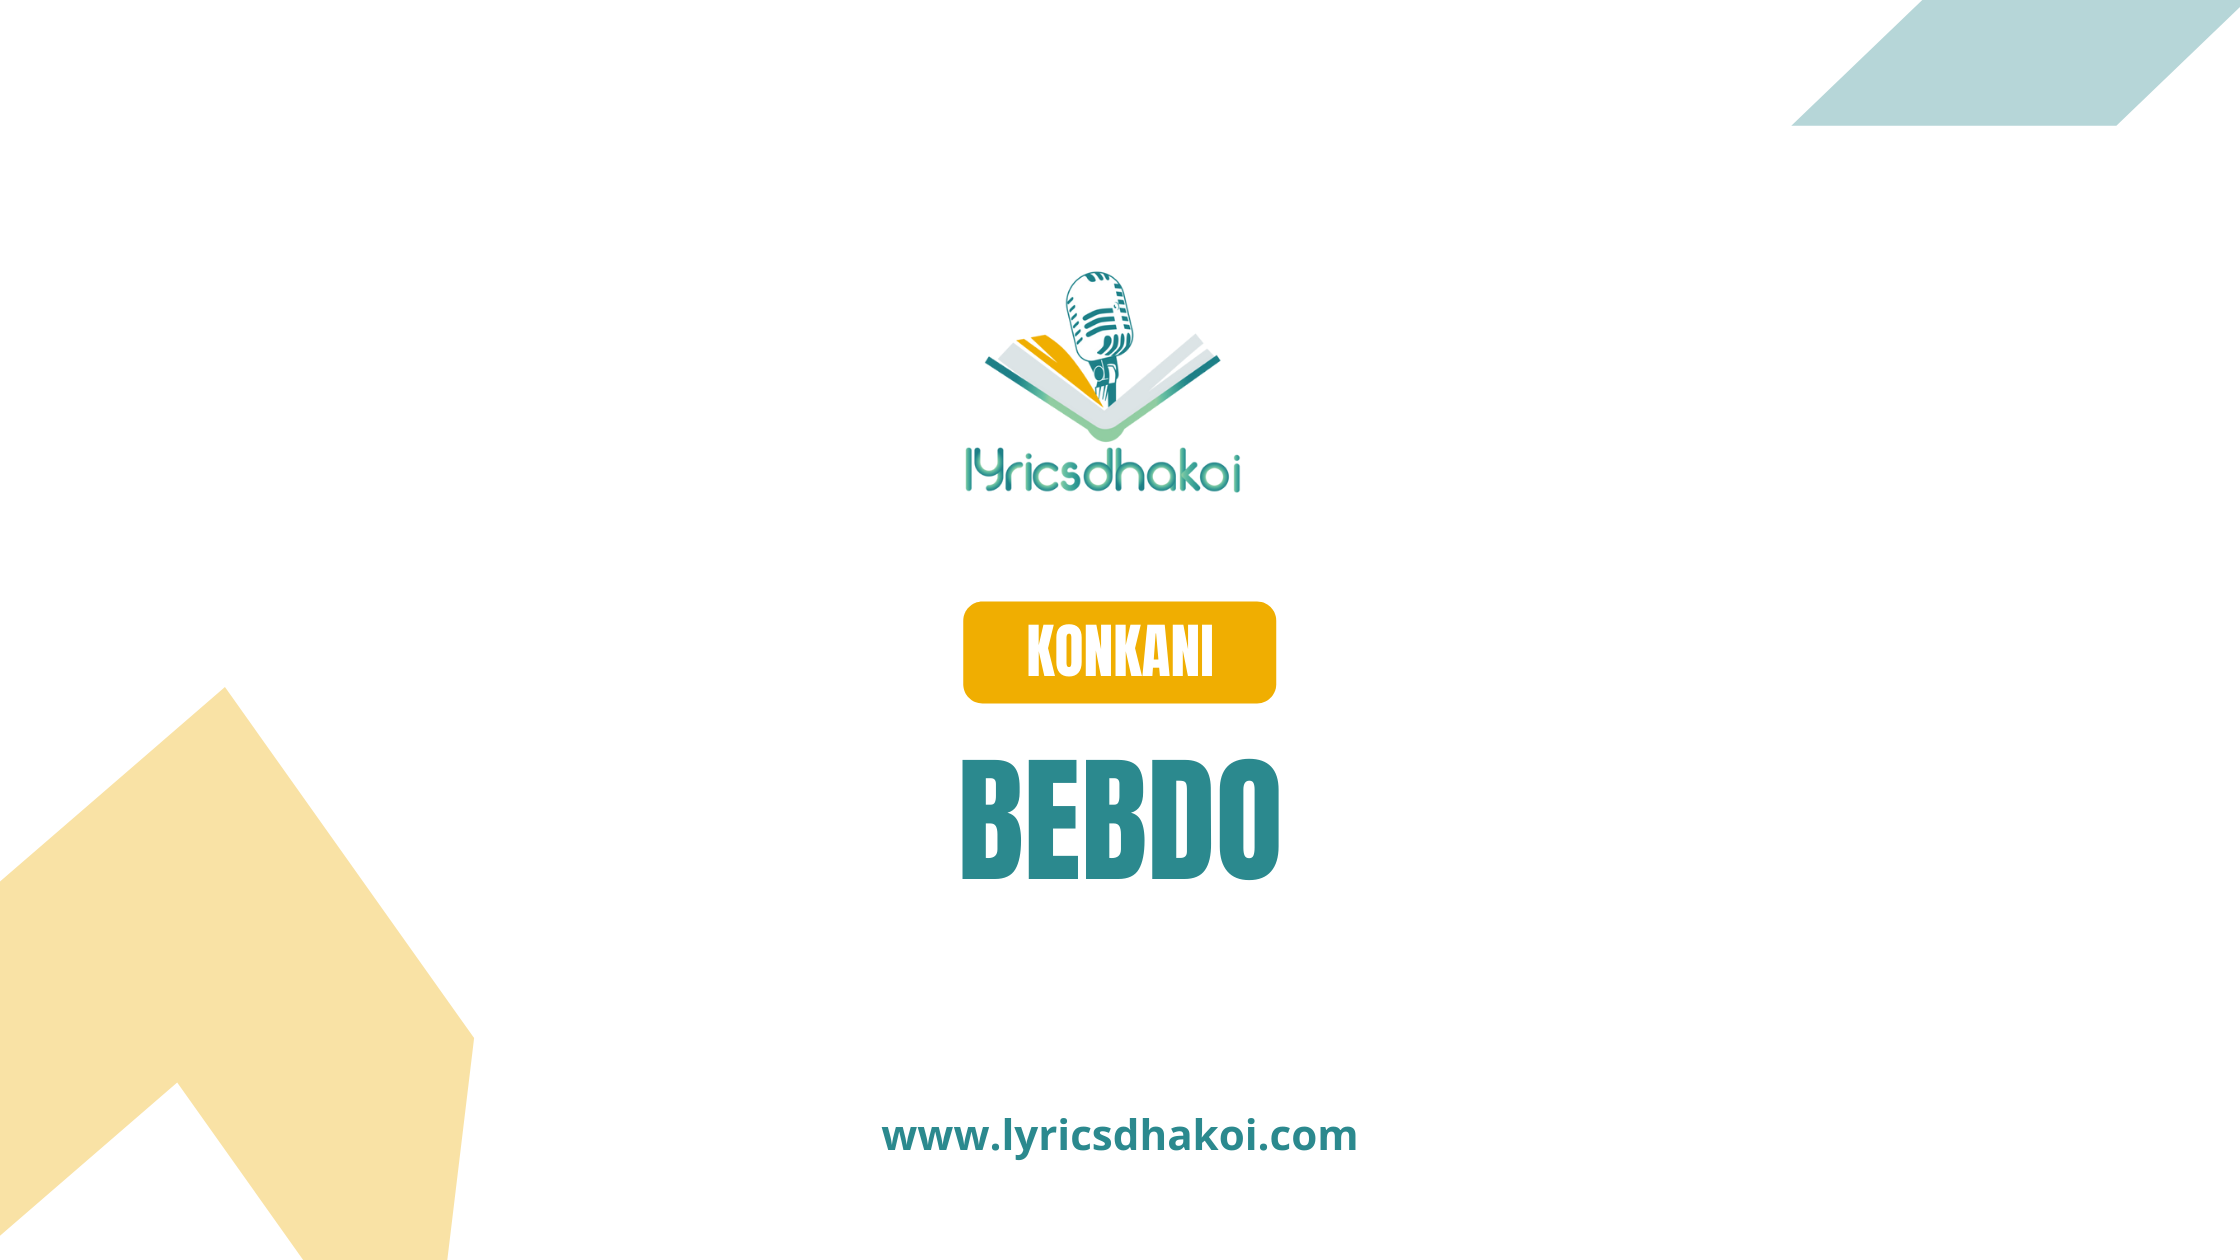 Bebdo Konkani Lyrics for Karaoke Online - LyricsDhakoi.com